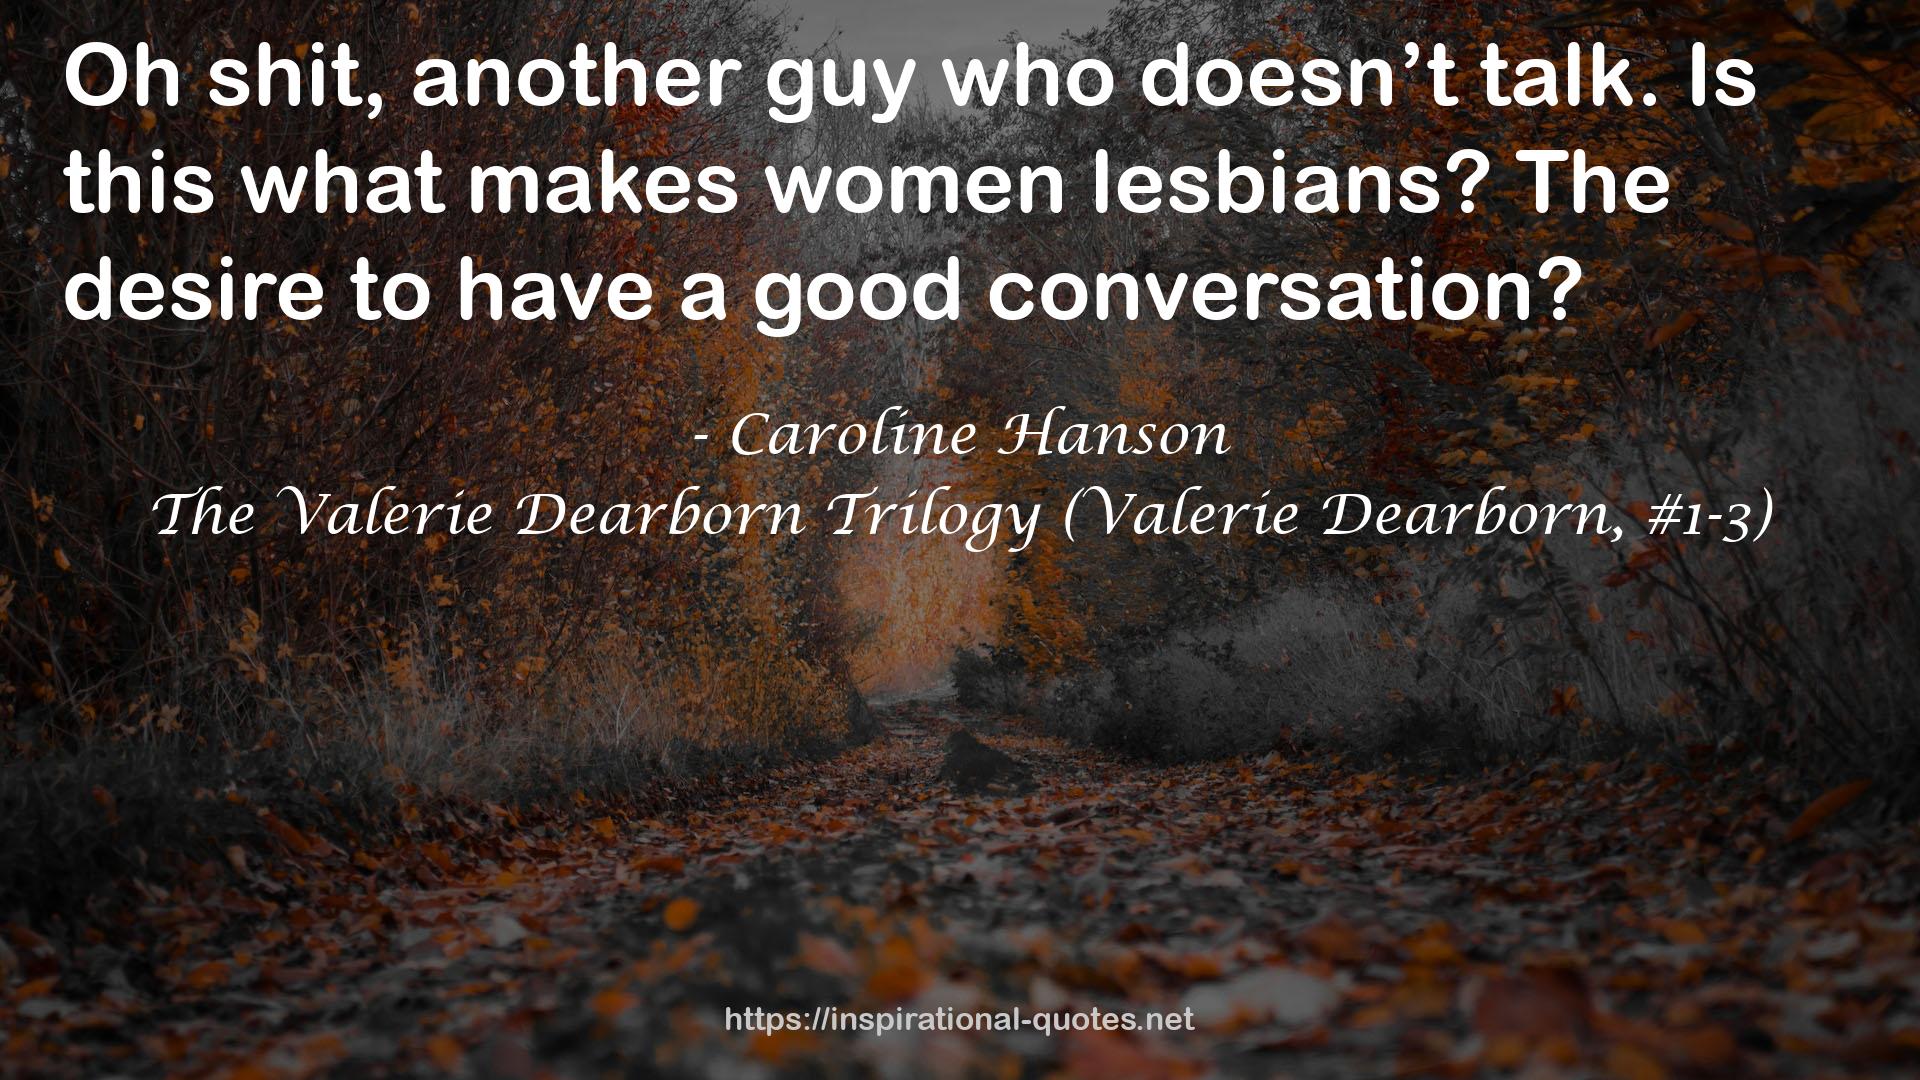 The Valerie Dearborn Trilogy (Valerie Dearborn, #1-3) QUOTES